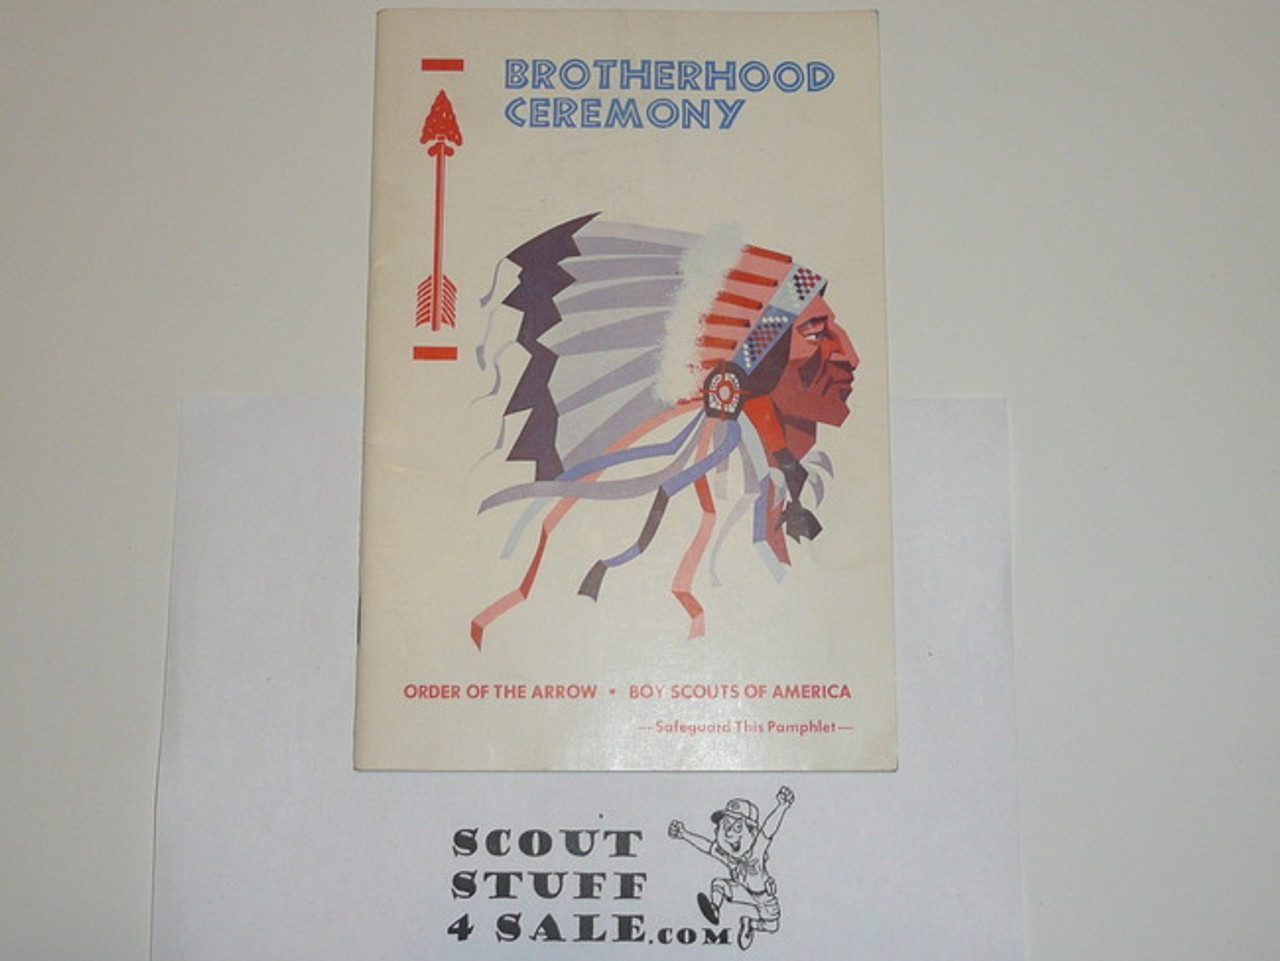 Brotherhood Ceremony Manual, Order of the Arrow, 1971, 9-71 Printing